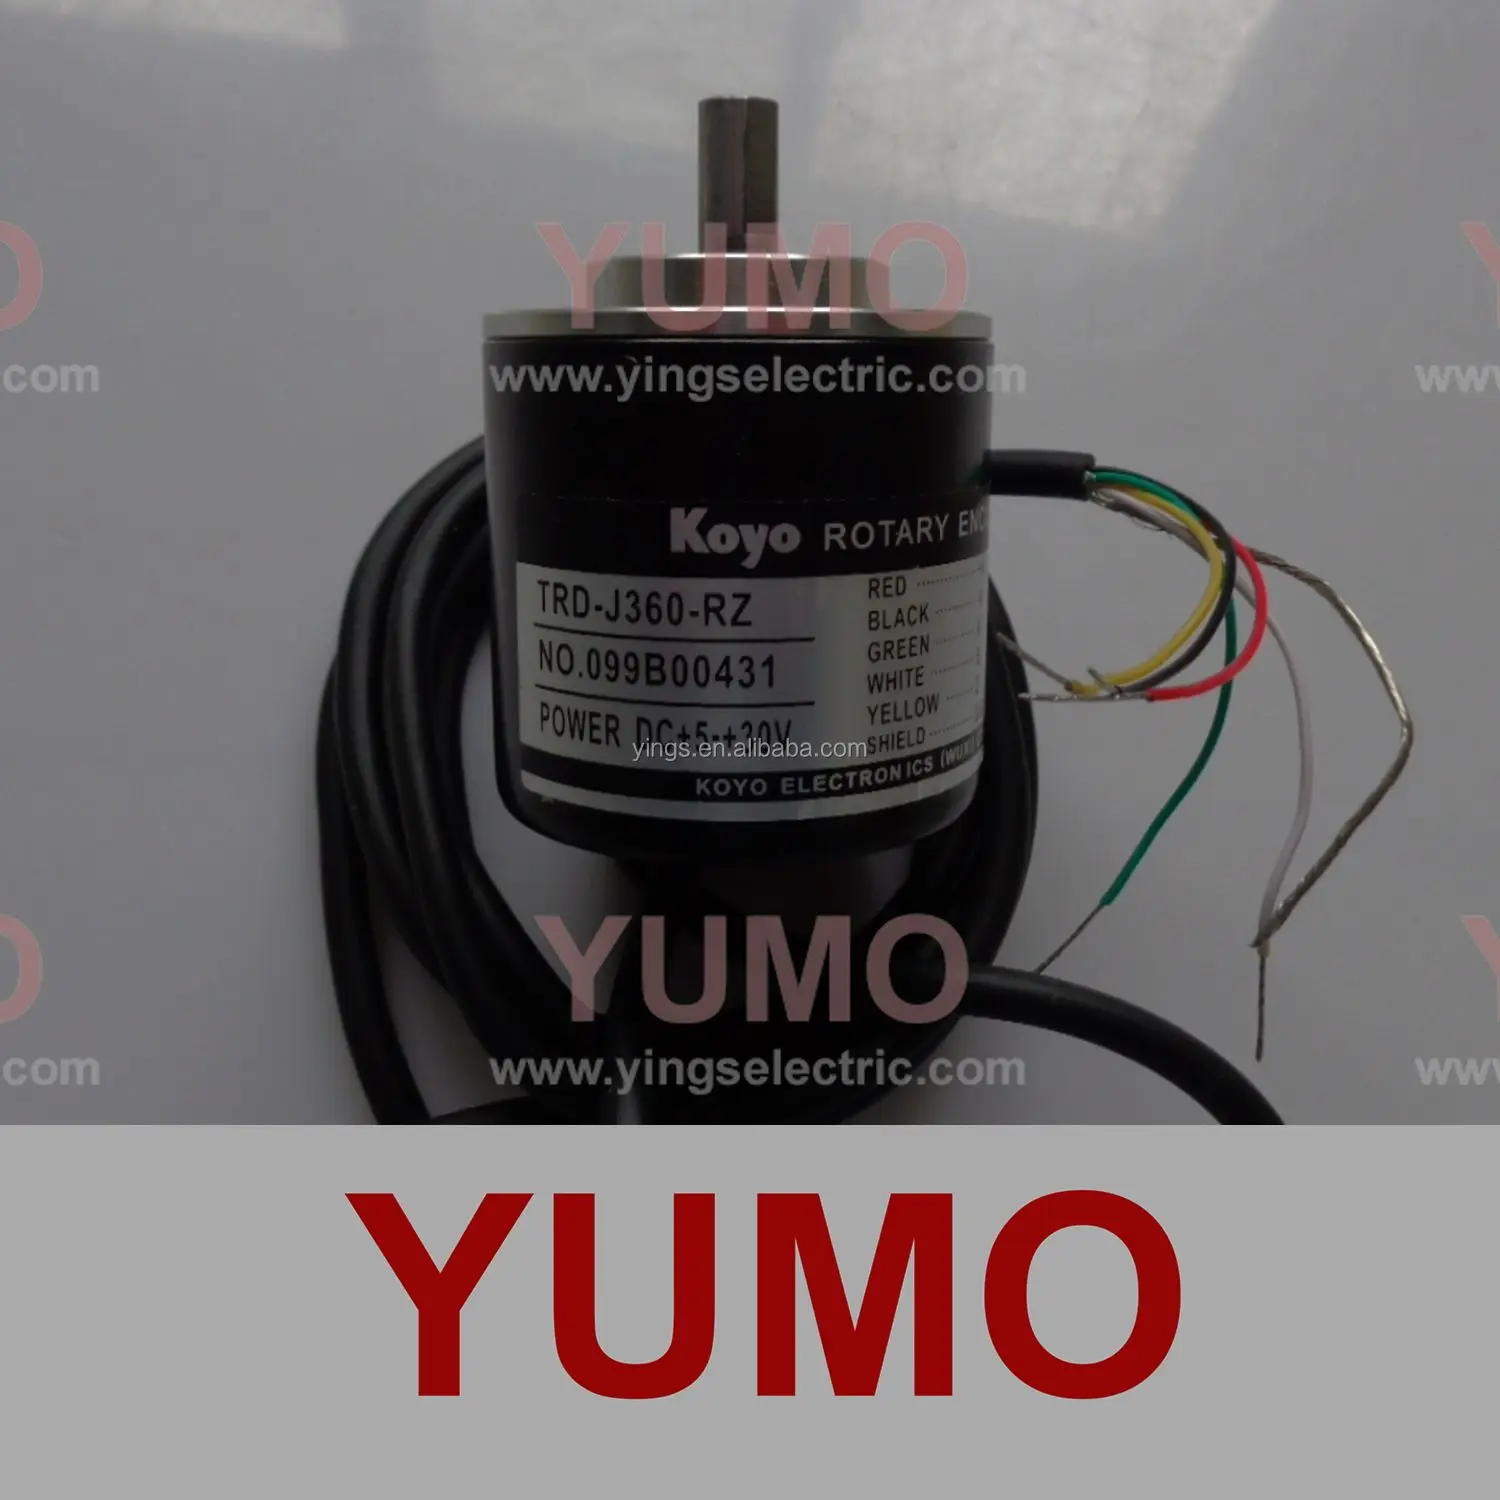 KOYO TRD-J500-RZ INCREMENTAL SHAFT ROTARY ENCODER FOR INDUSTRY USE NEW 